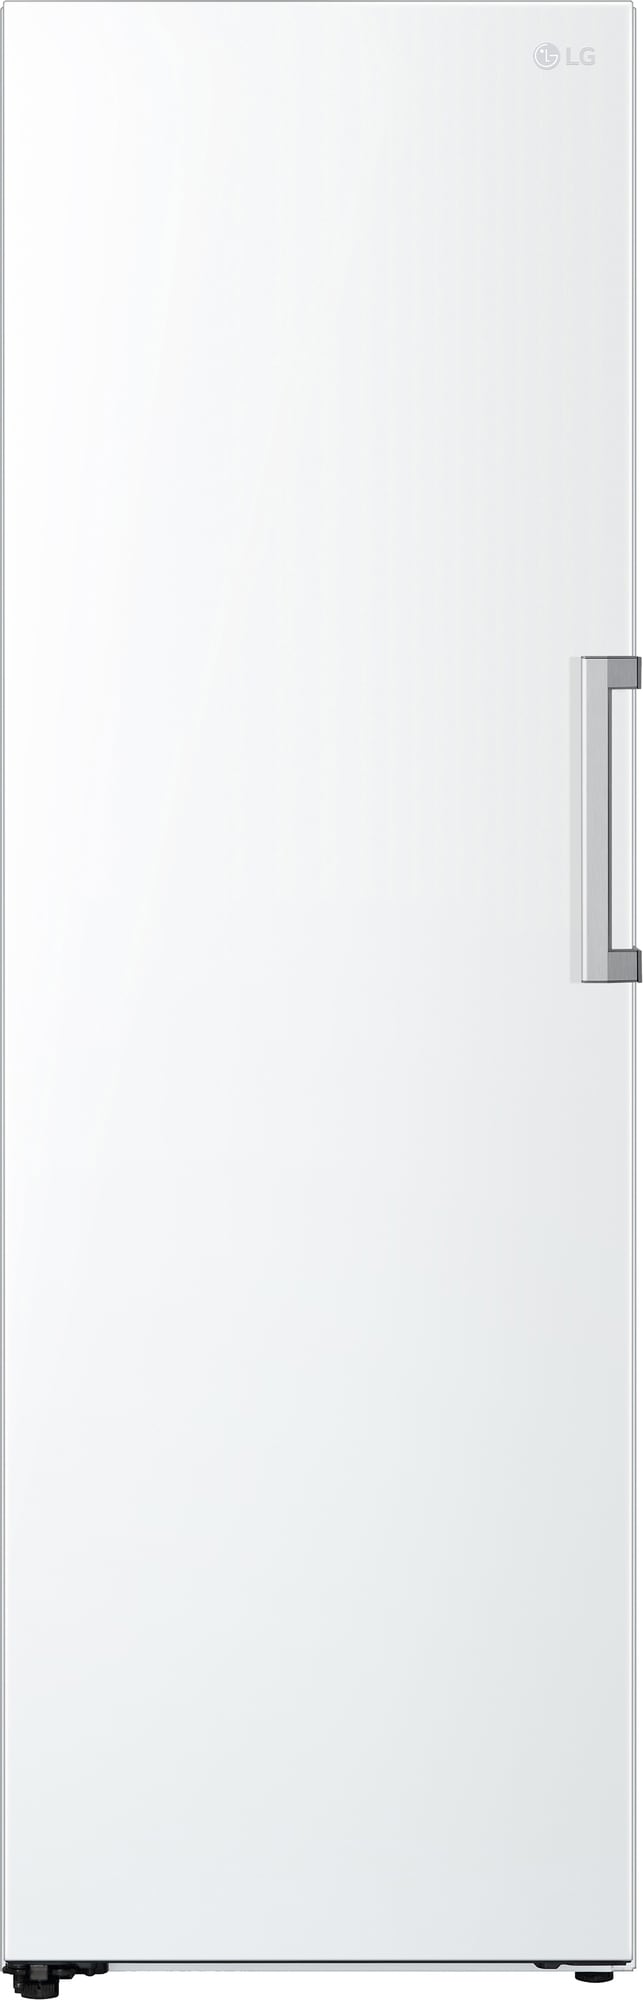 LG opretstående fryser GFT61SWCSF (hvid)